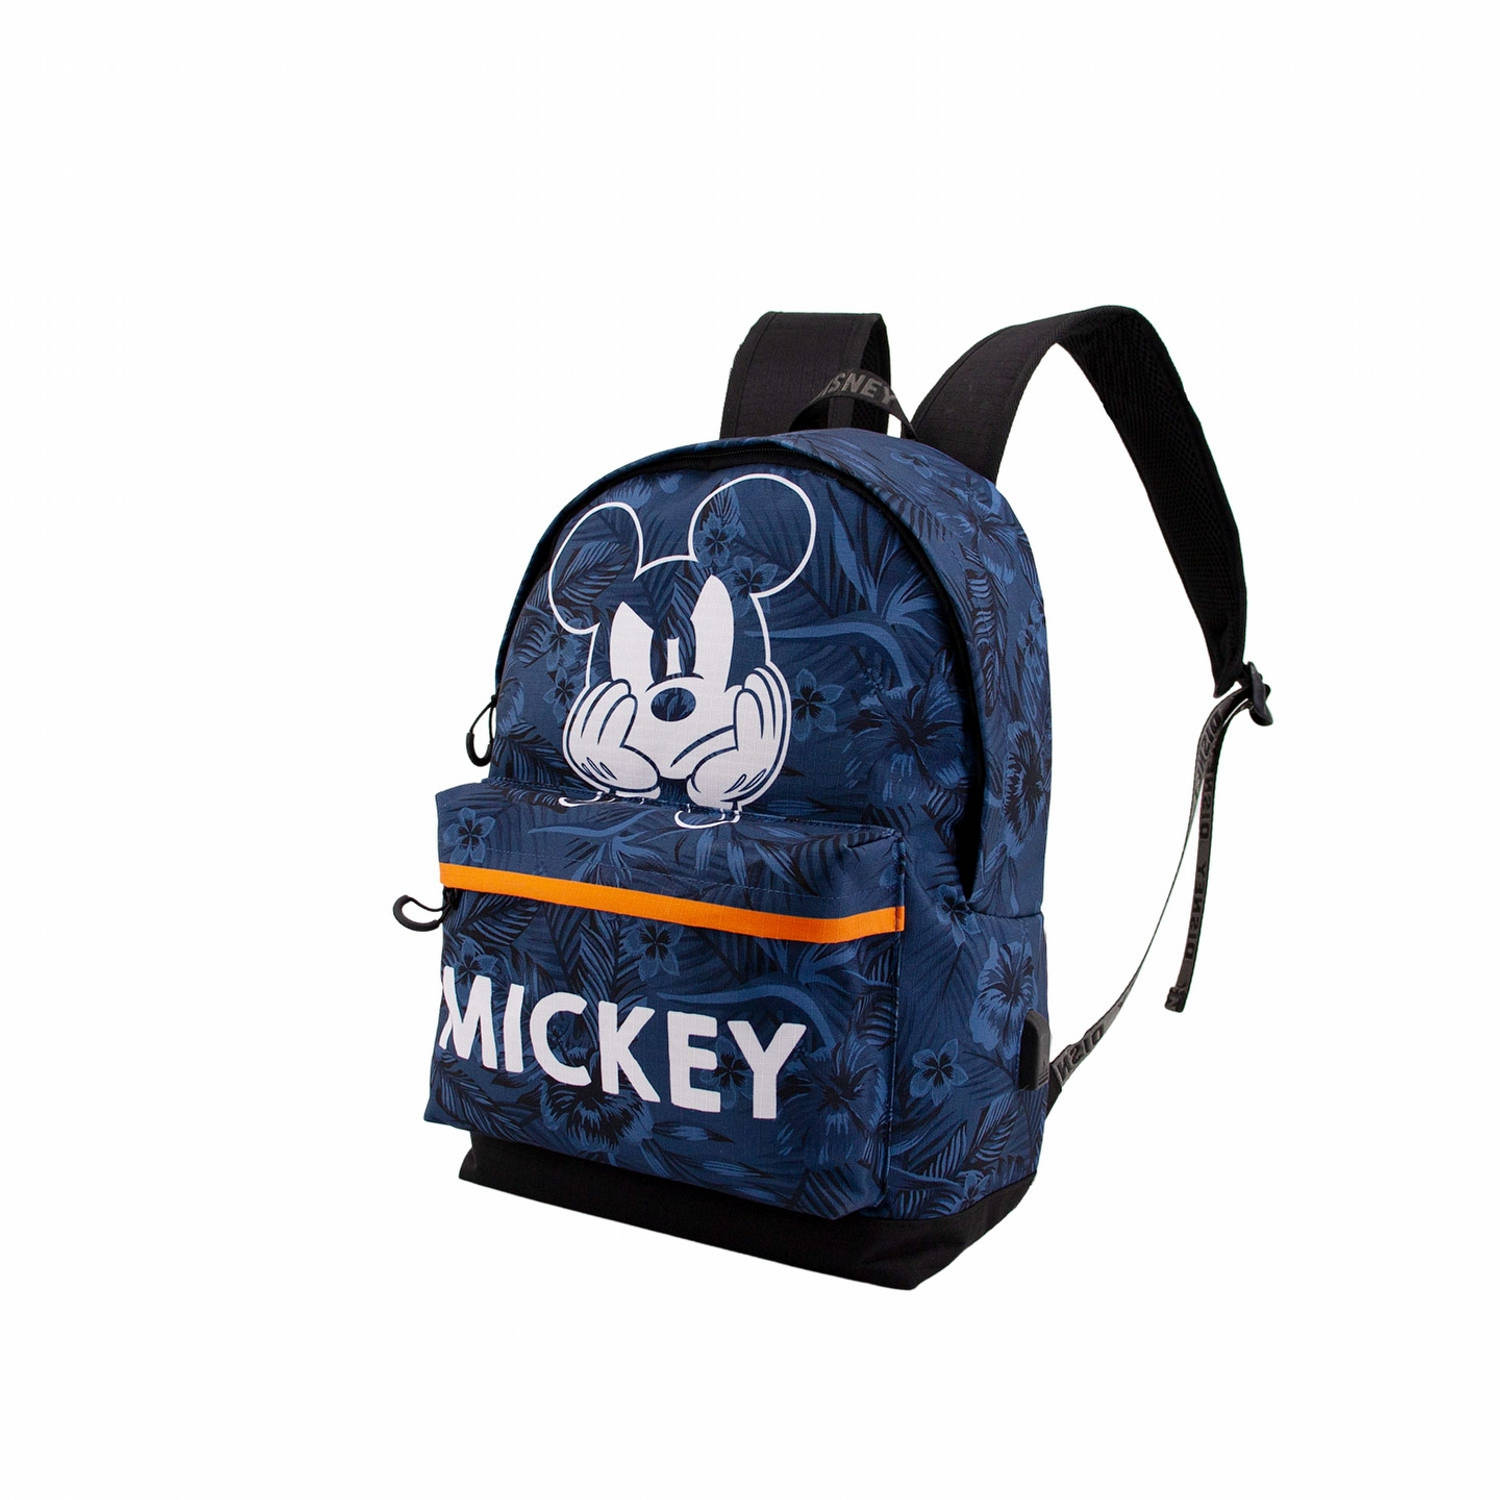 Disney Mickey Mouse 4A schoolrugzak blauw v.a 12 jaar